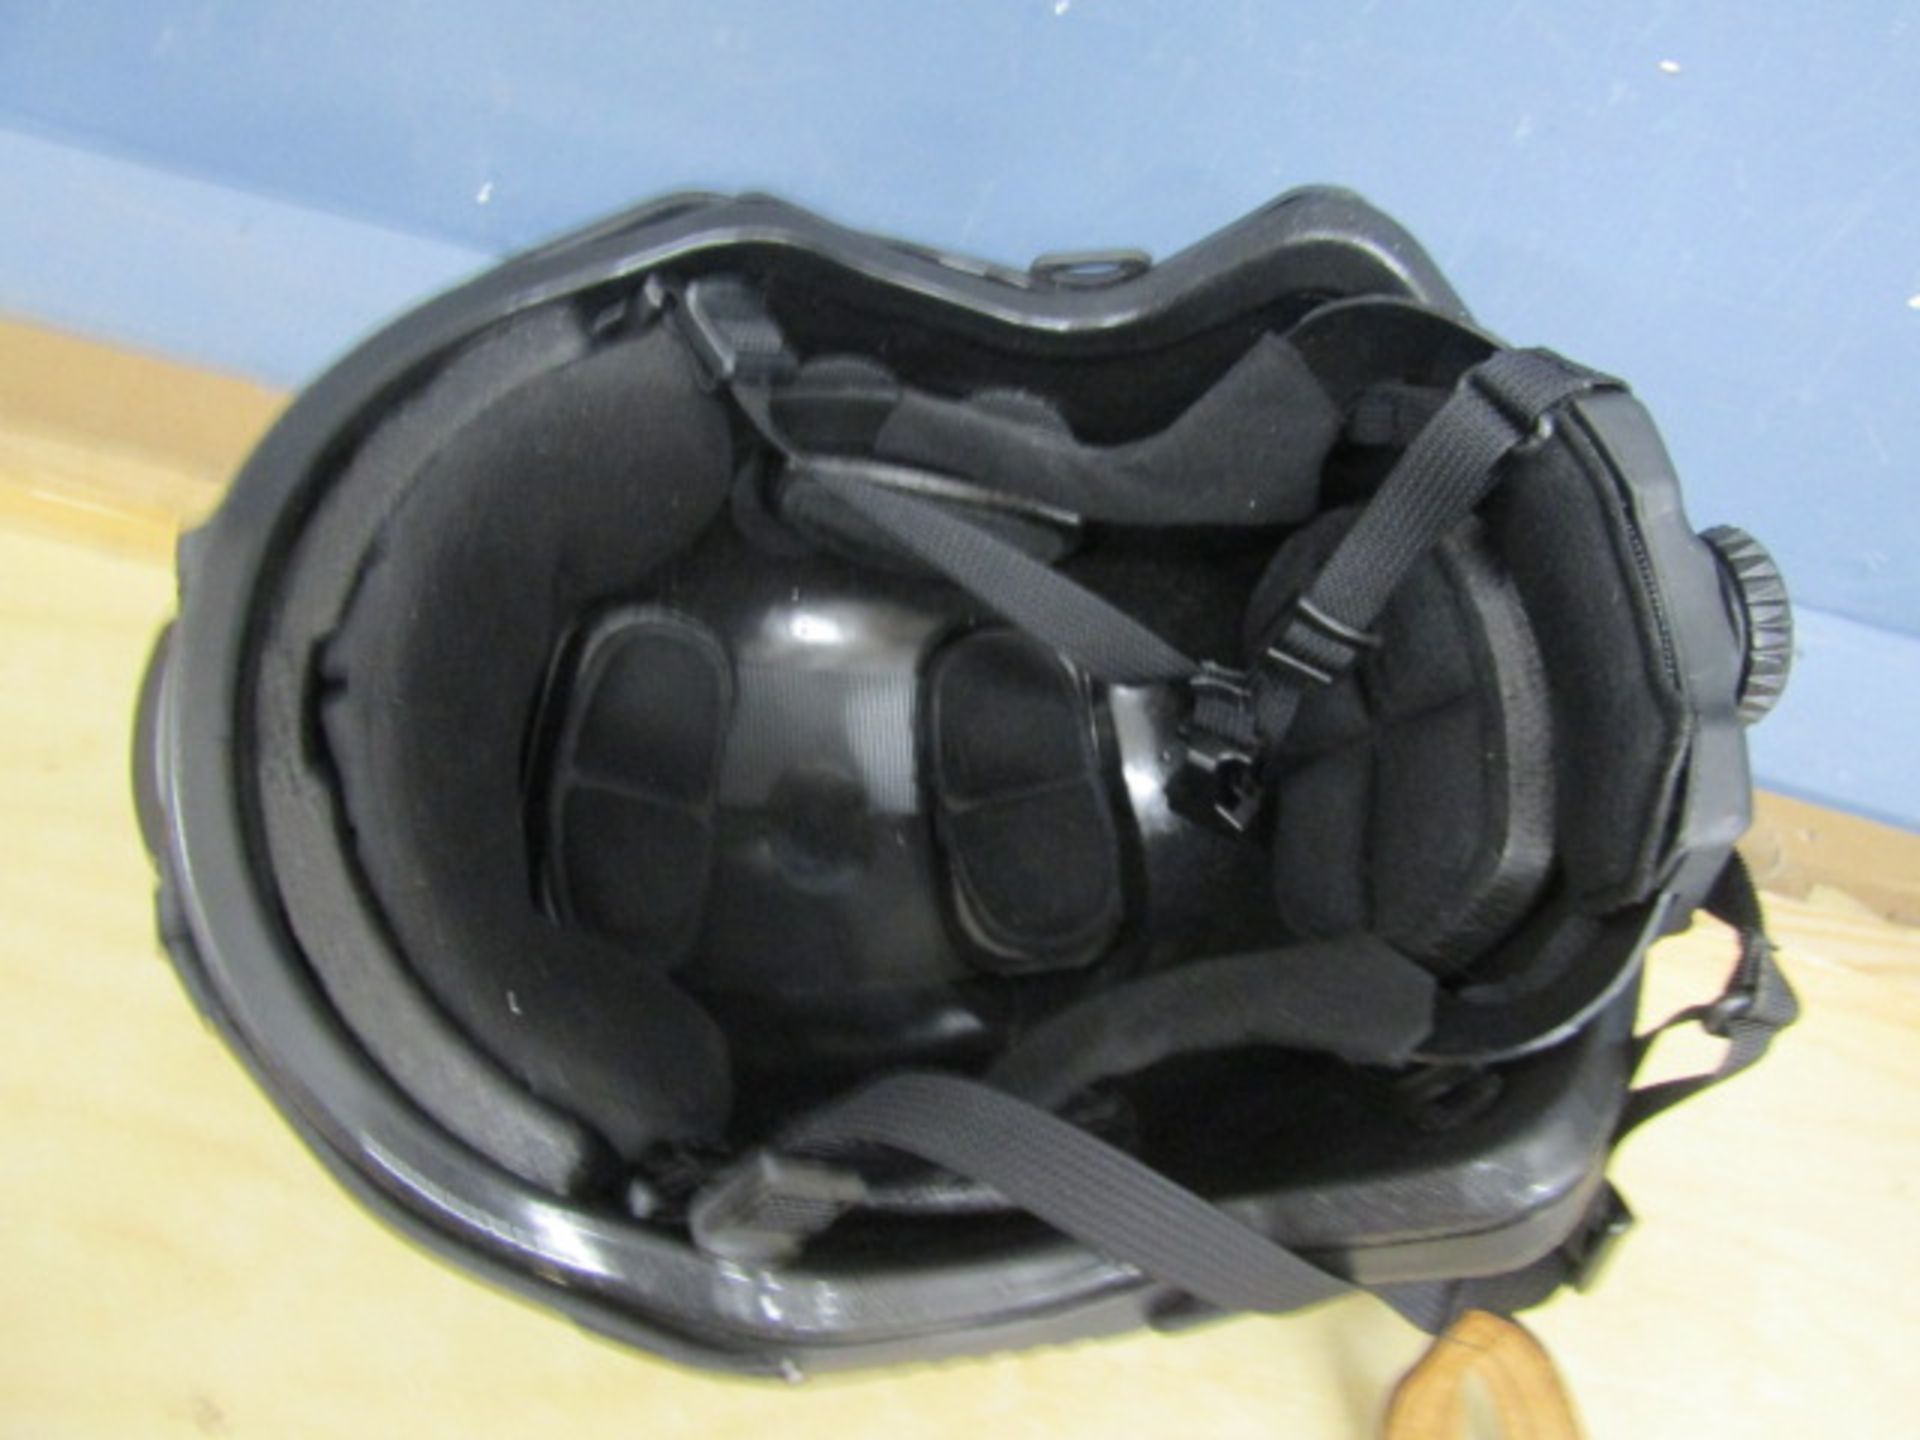 Kevlar (Aramid) ballistic FAST helmet with copy of test report- large size, unused - Image 4 of 5